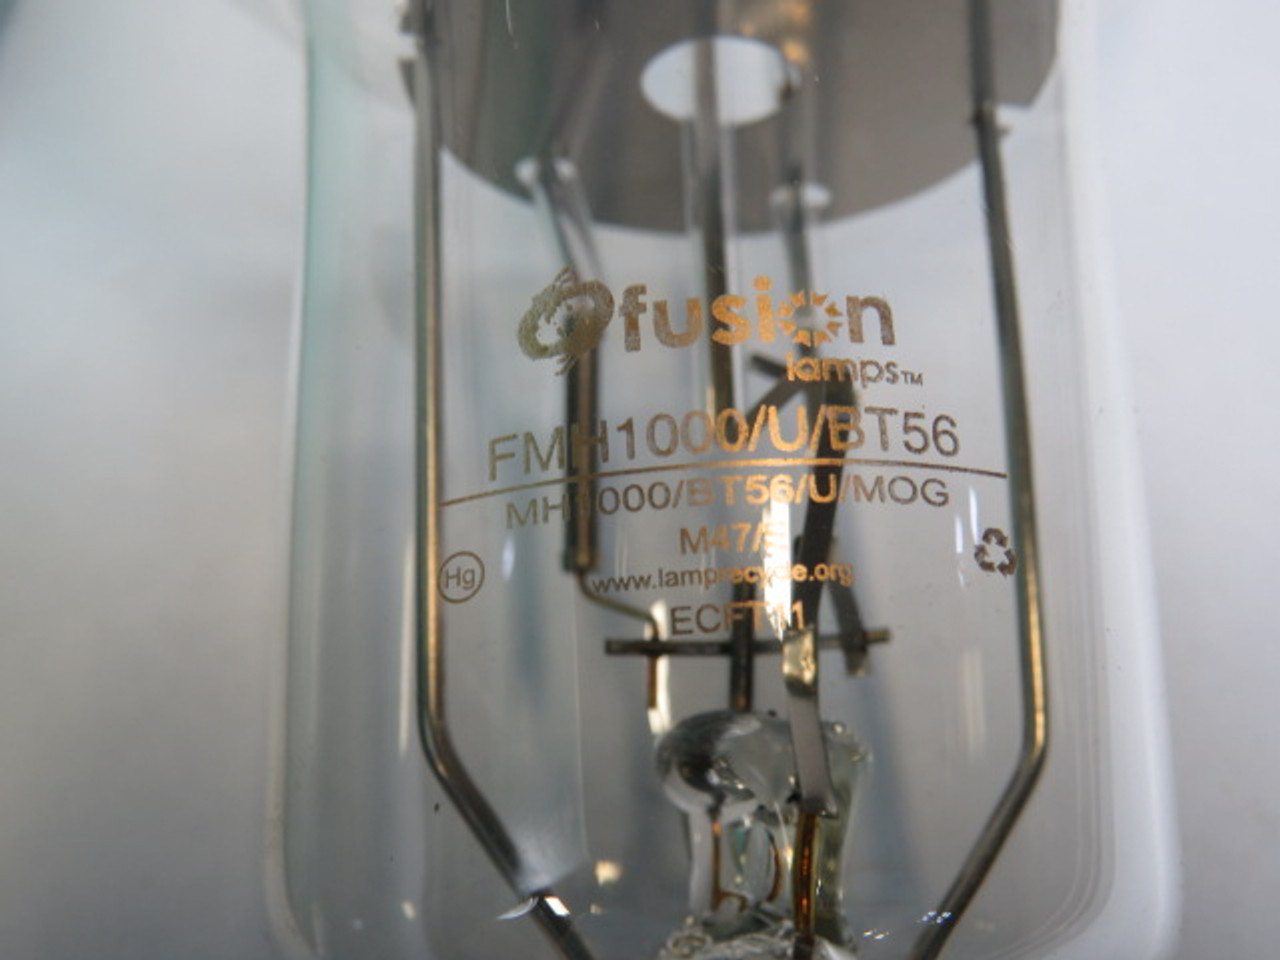 Fusion Lamps FMH1000/U/BT56 Metal Halide Lamp 1000W ! NEW !